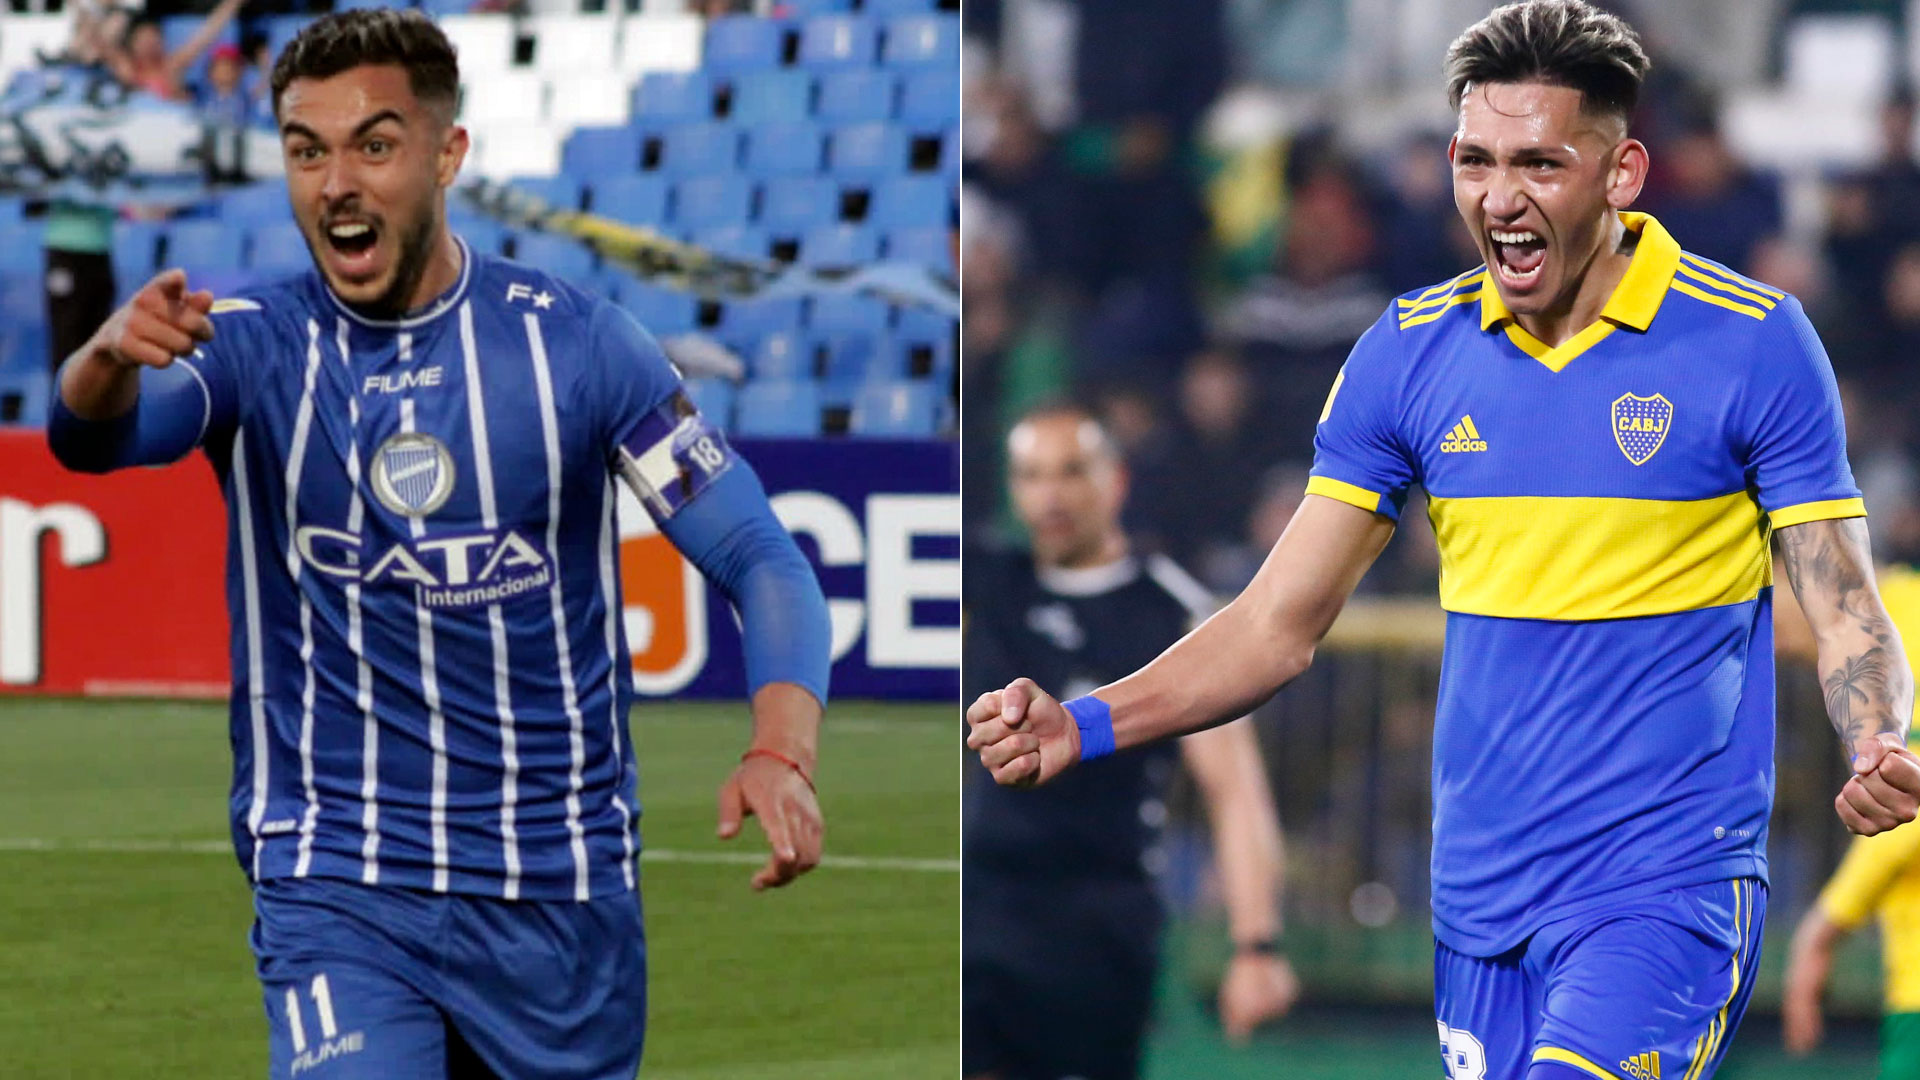 Martín Ojeda dan Luis Vázquez, kartu gol hari ini (@fotobairesarg)